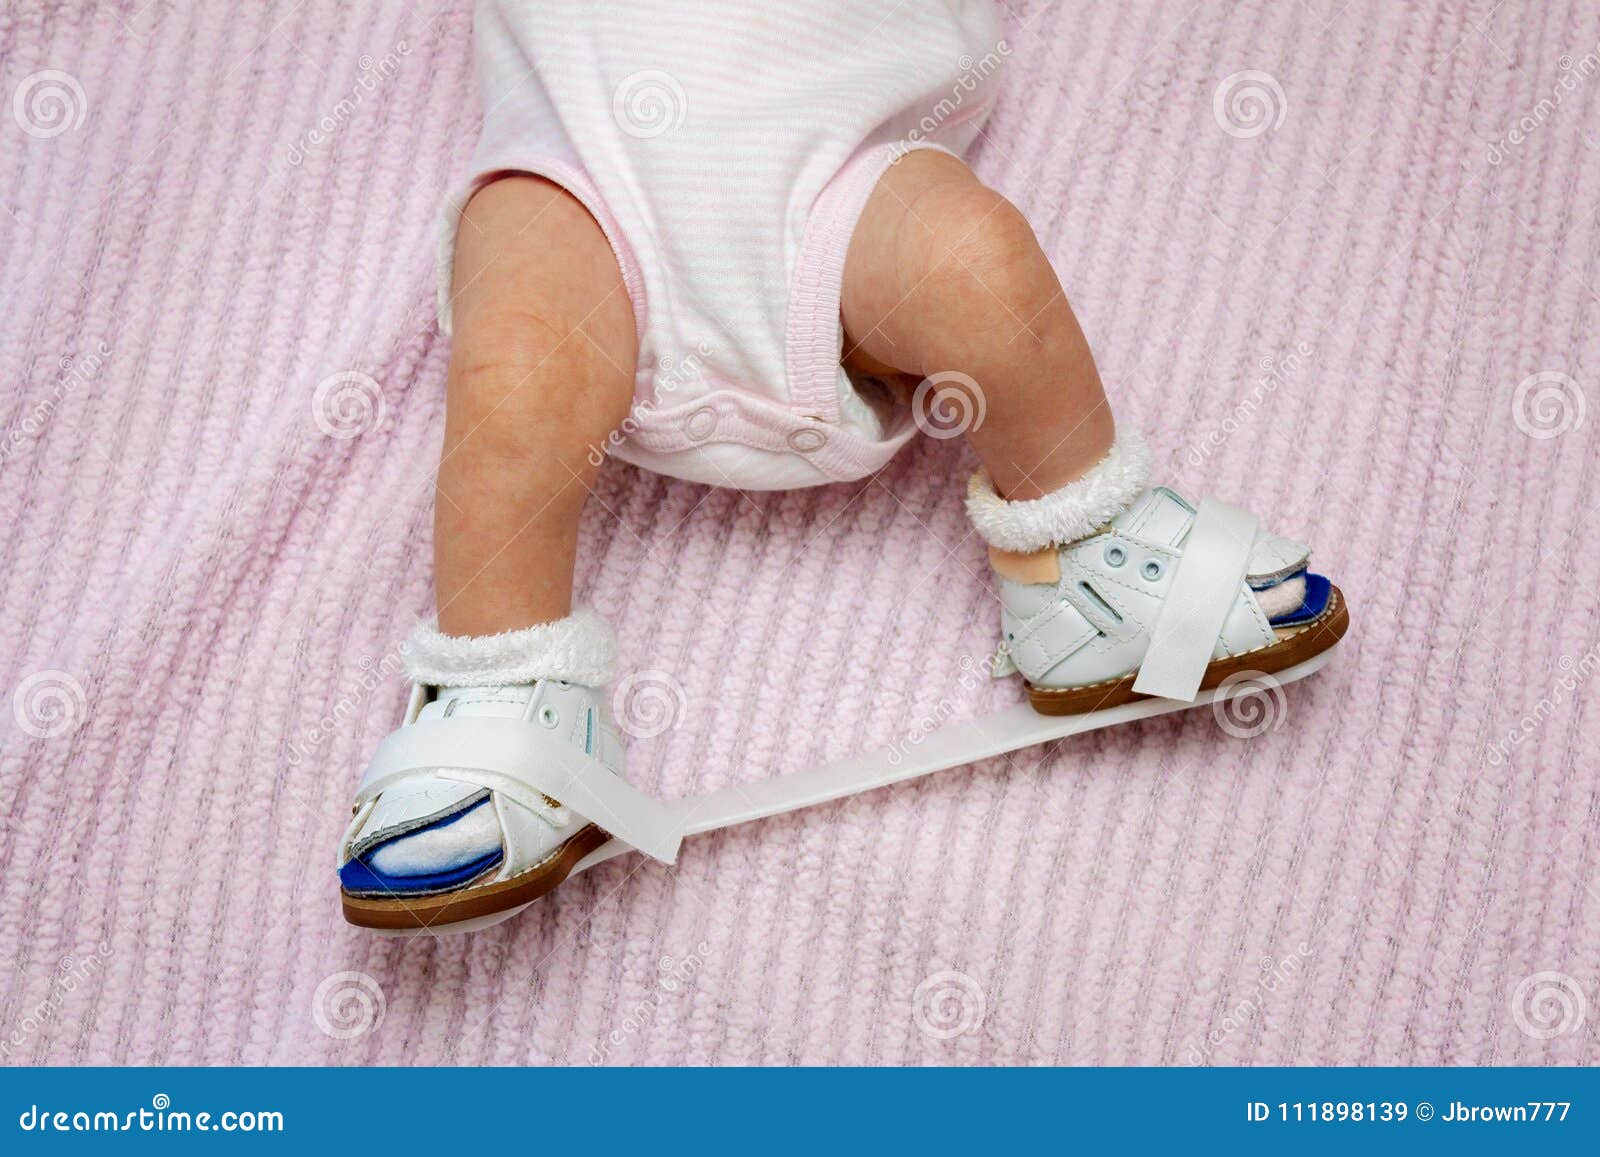 Newborn Orthopedic Shoes stock image. Image of footwear - 111898139